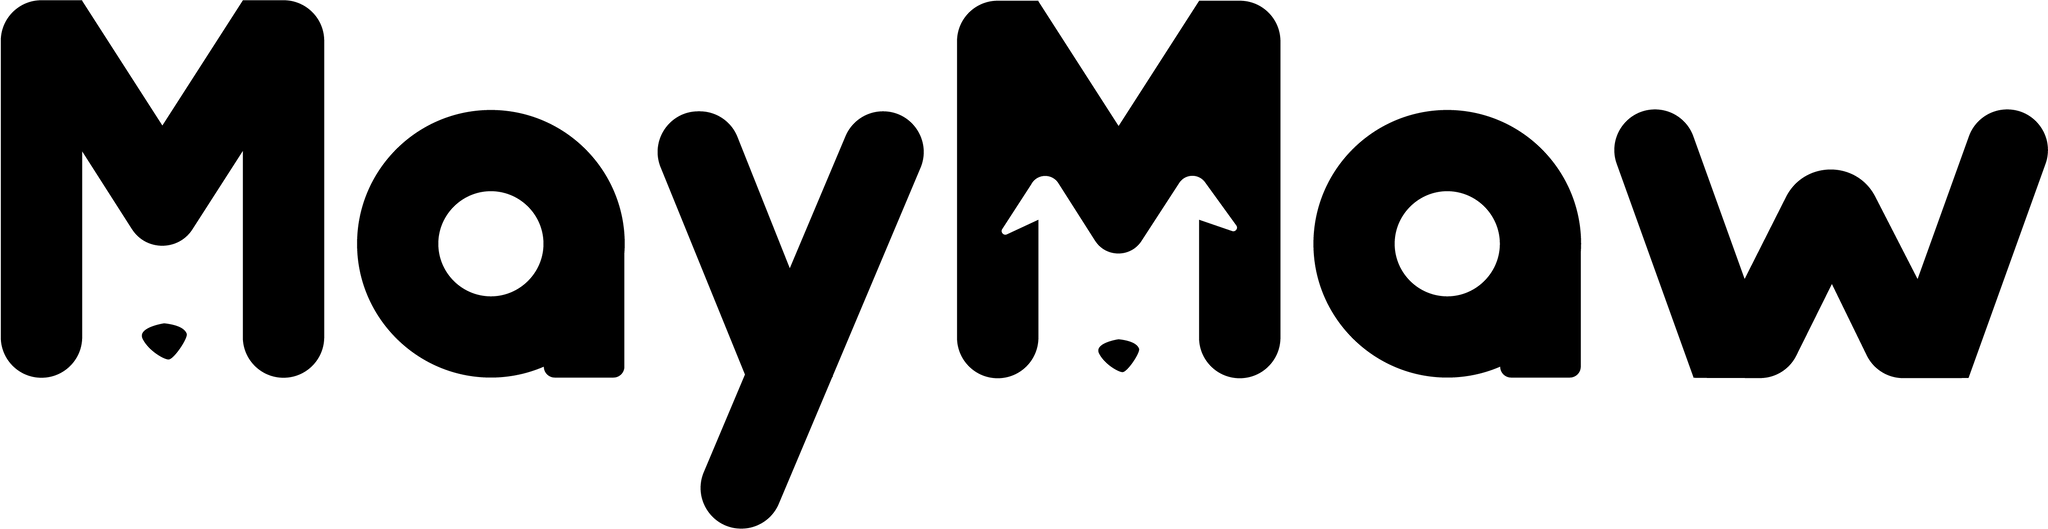 maymaw website logo black